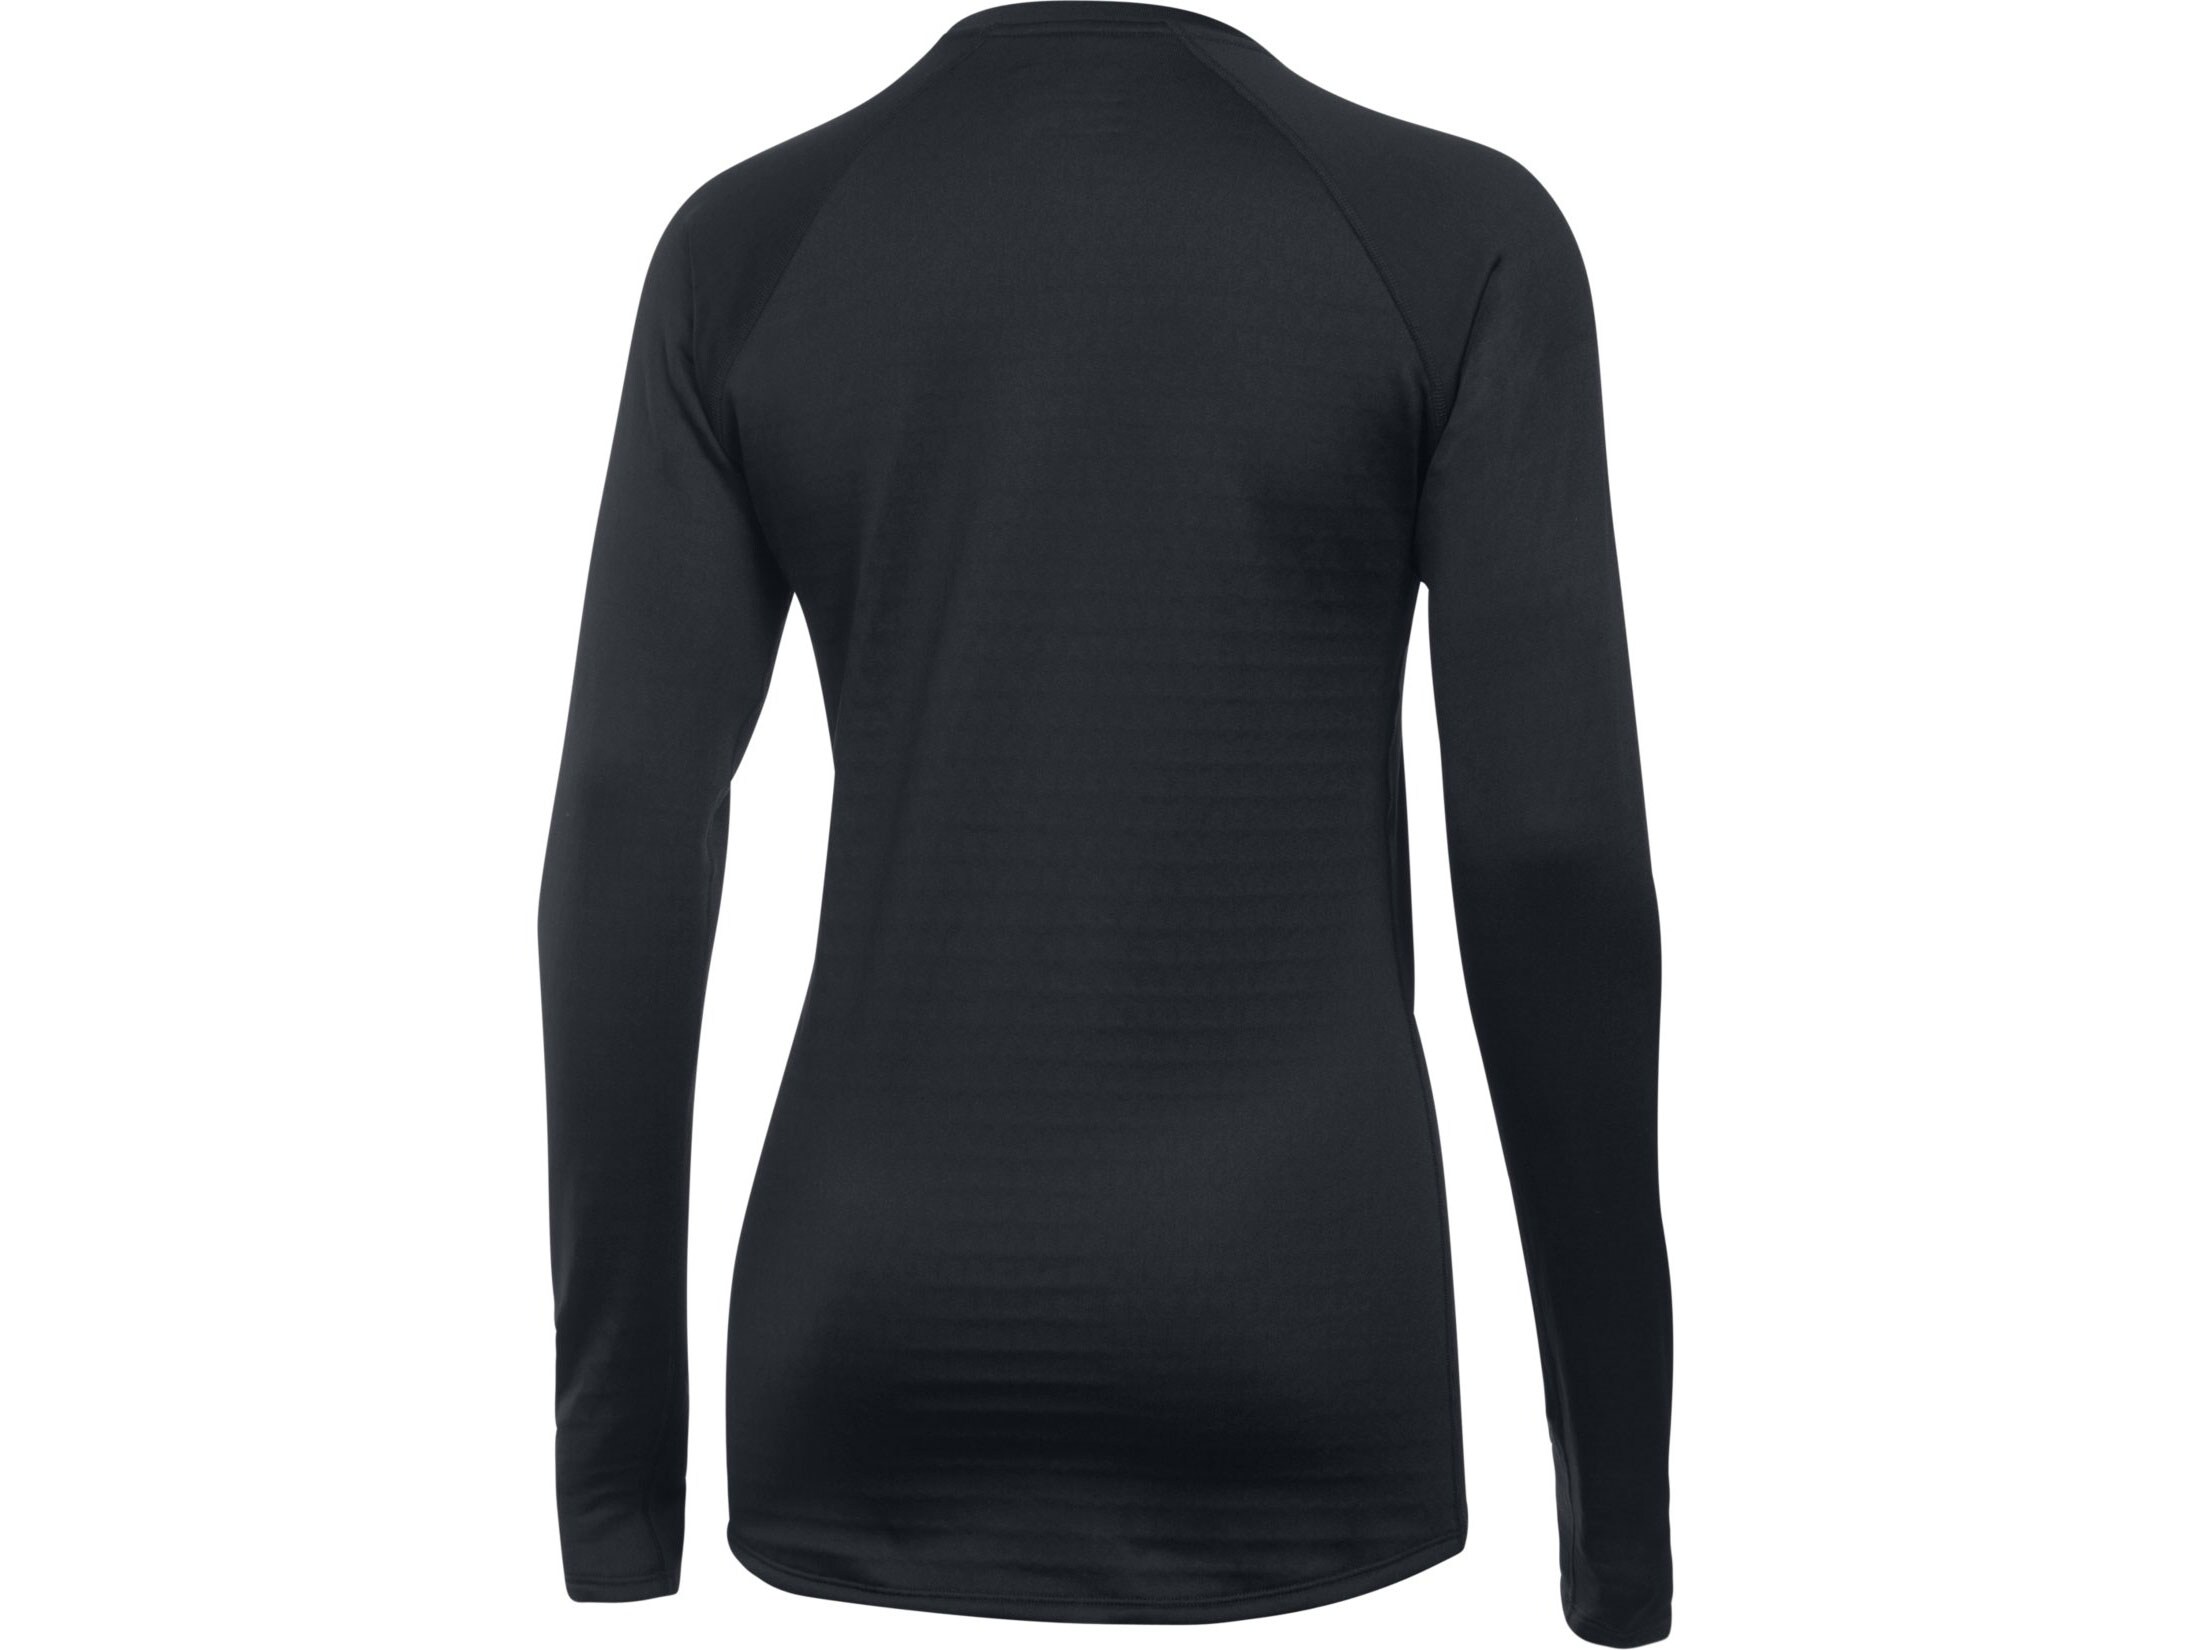 UNDER ARMOUR New Protective 4 Pad BLACK Football Top Shirt NEW Mens Sz 3XL XXXL 